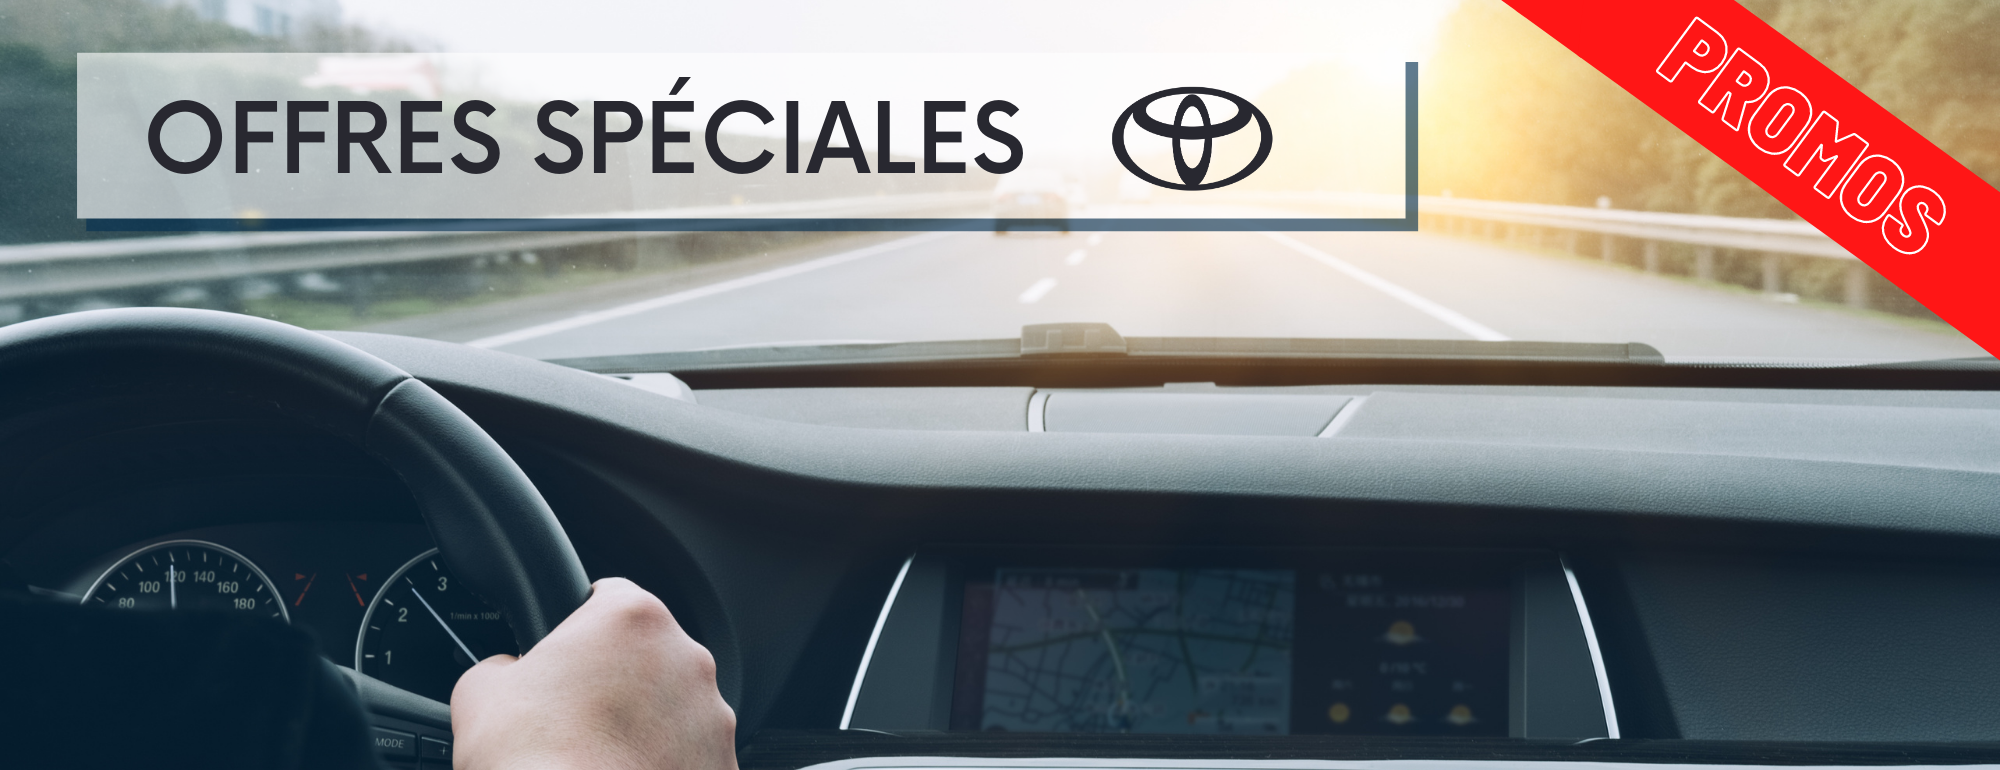 Offres spéciales Toyota Autosprinter